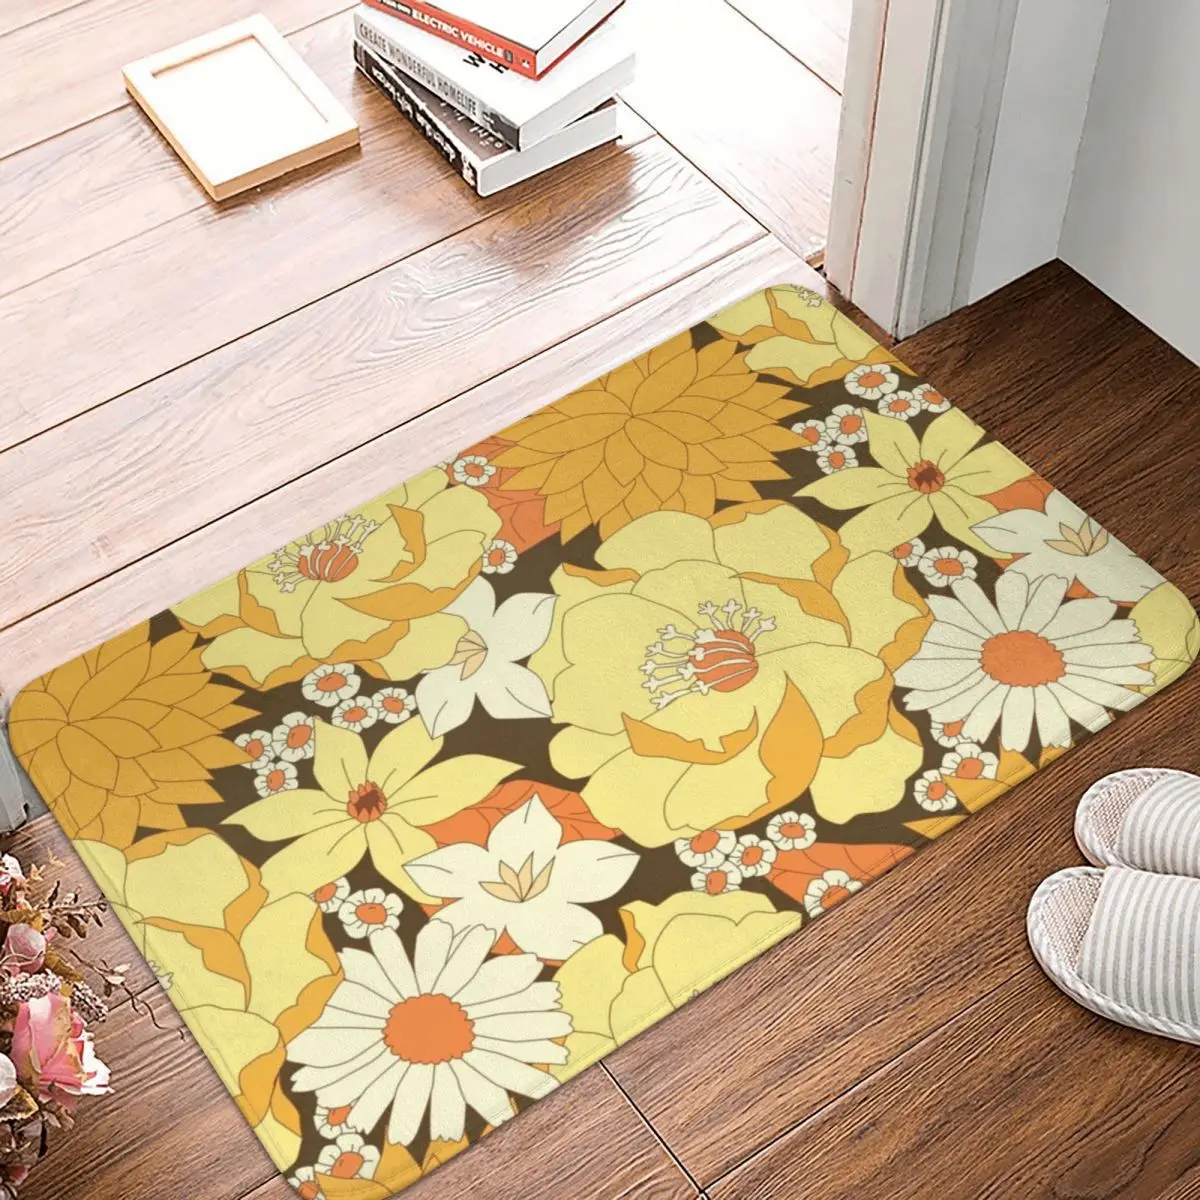 

Yellow Orange Brown Vintage Floral Doormat Rug carpet Mat Footpad Non-slip AntiwearEntrance Kitchen Bedroom balcony Cartoon